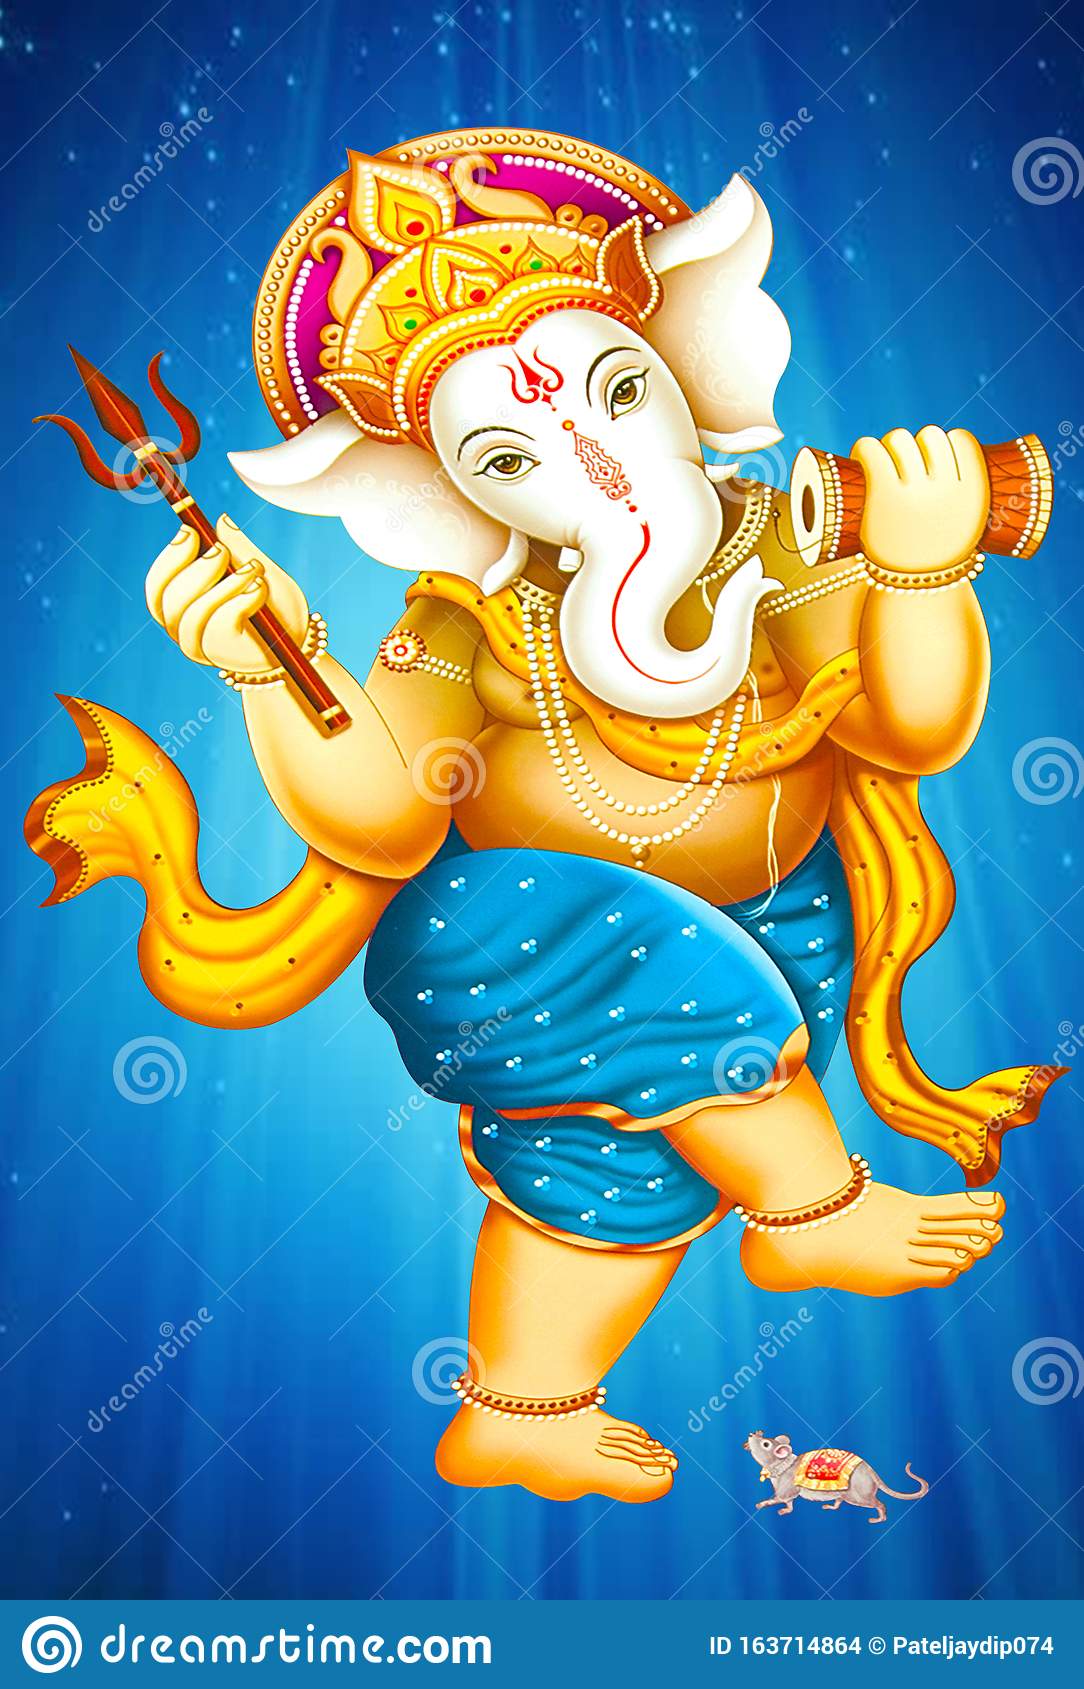 Hindu lord ganesha texture wallpaper background stock photo